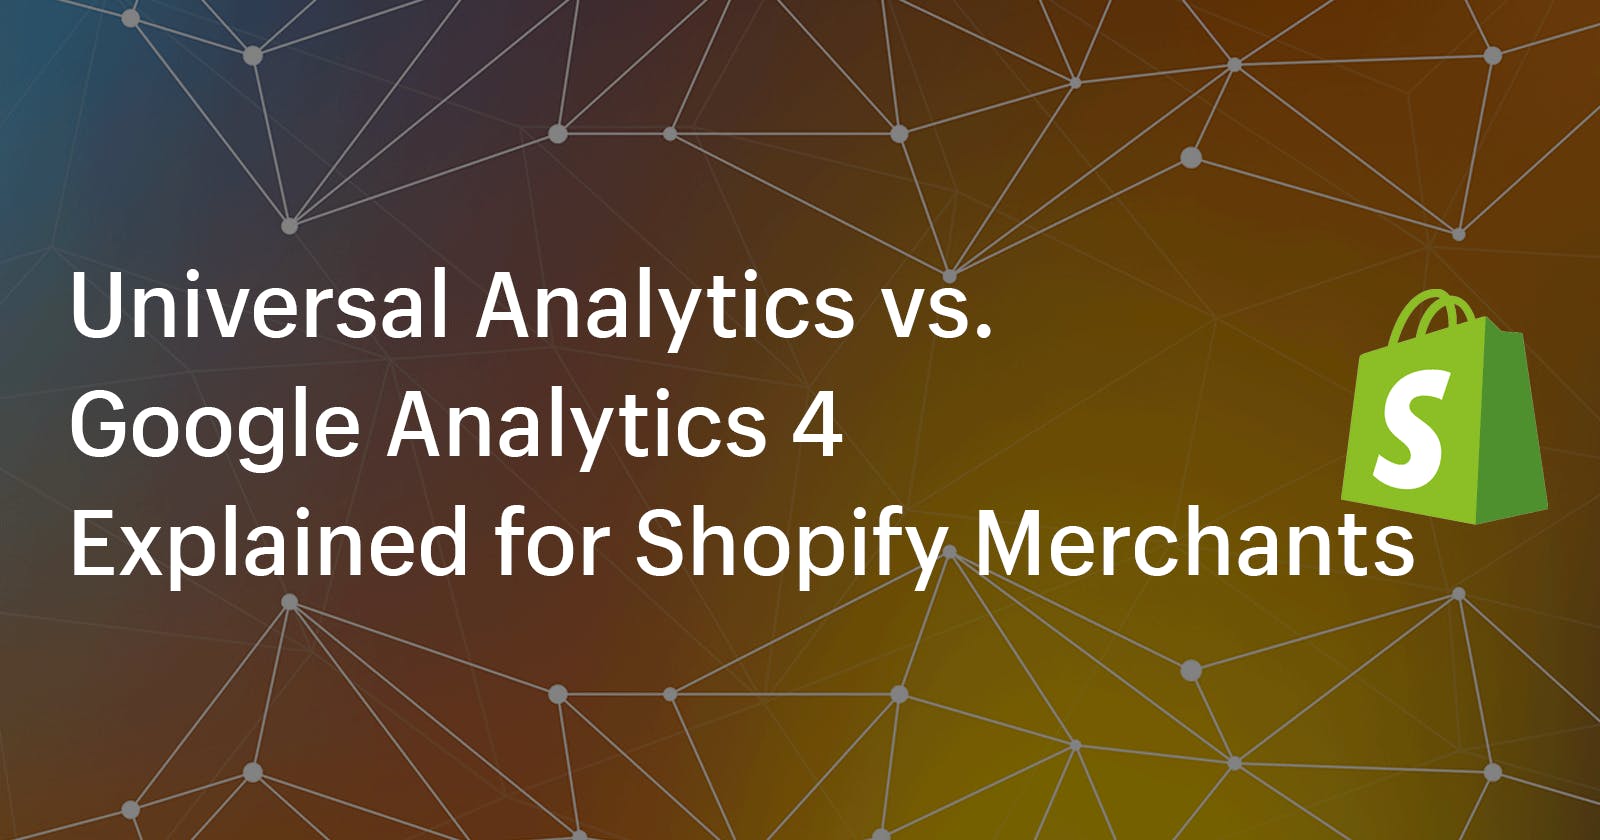 Universal Analytics vs. Google Analytics 4 Explained for Shopify Merchants